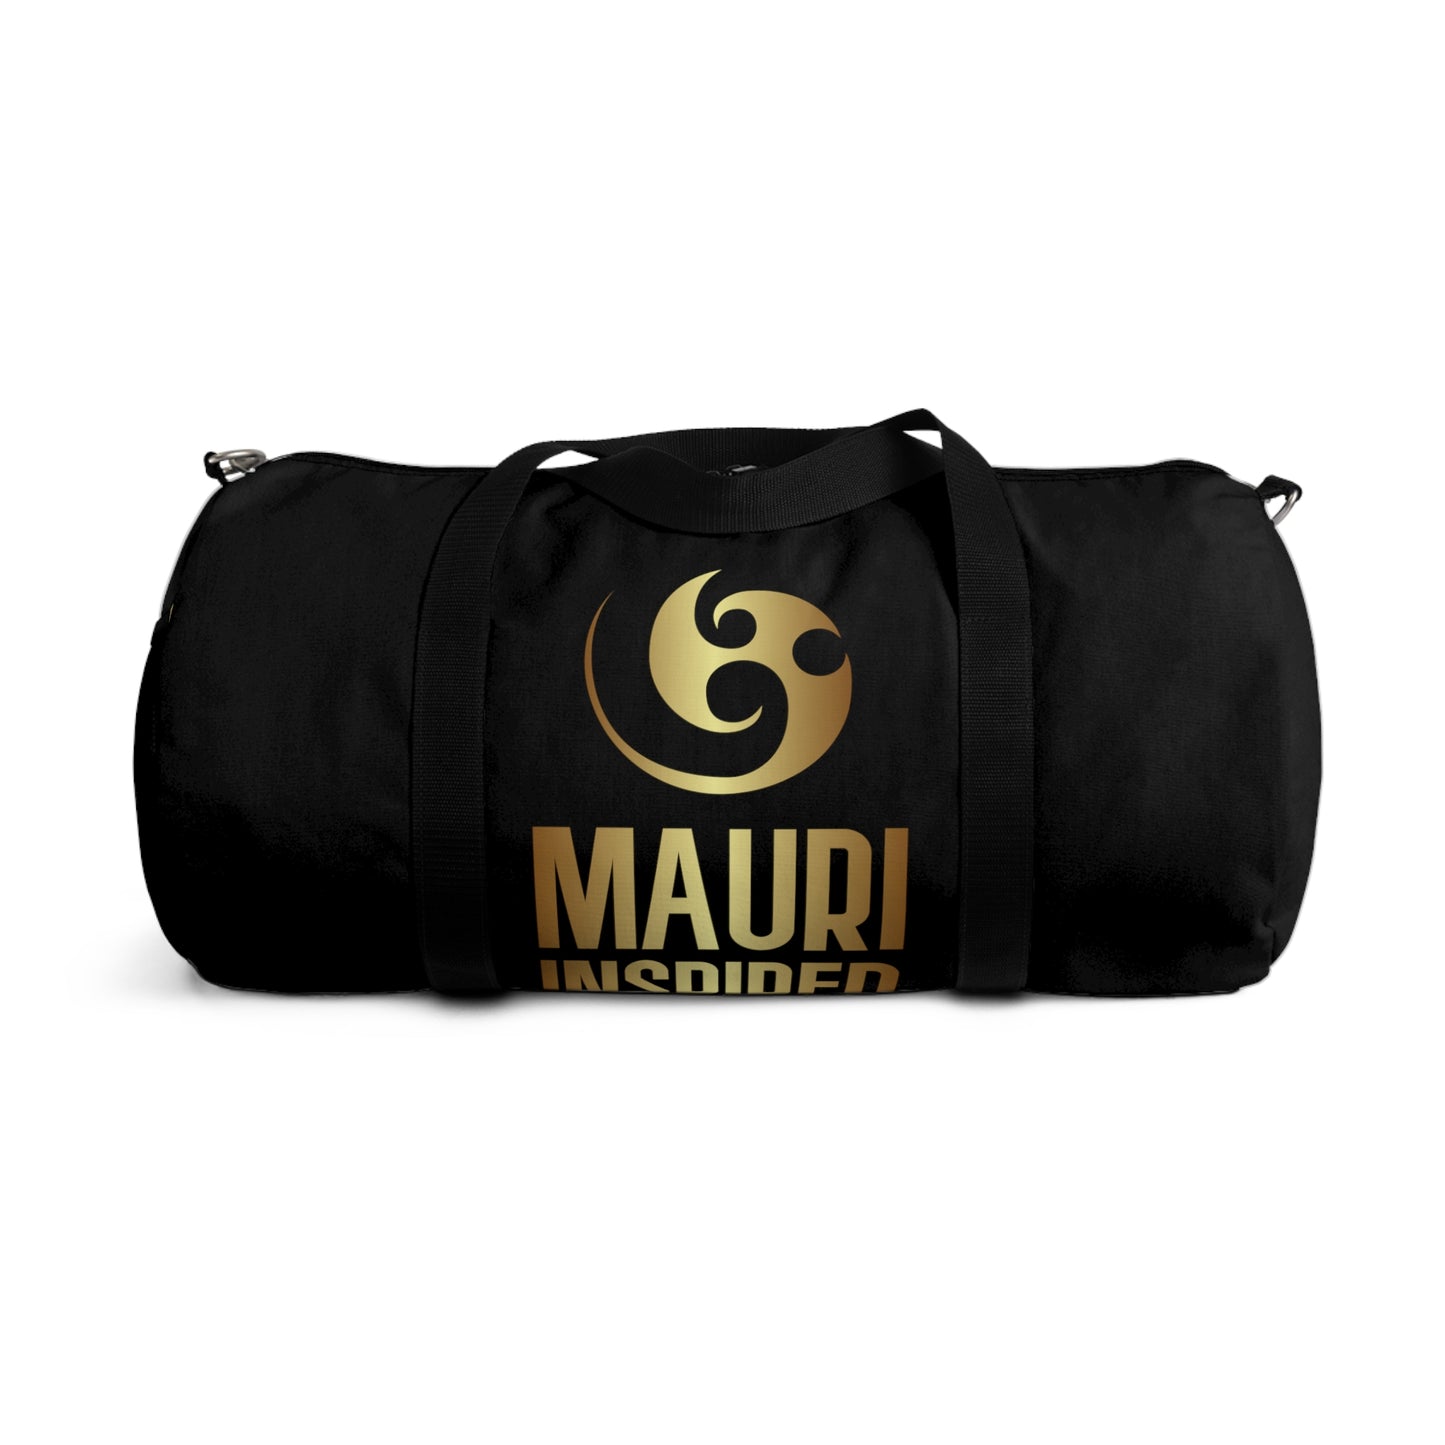 Mauri Inspired - Duffel Bag